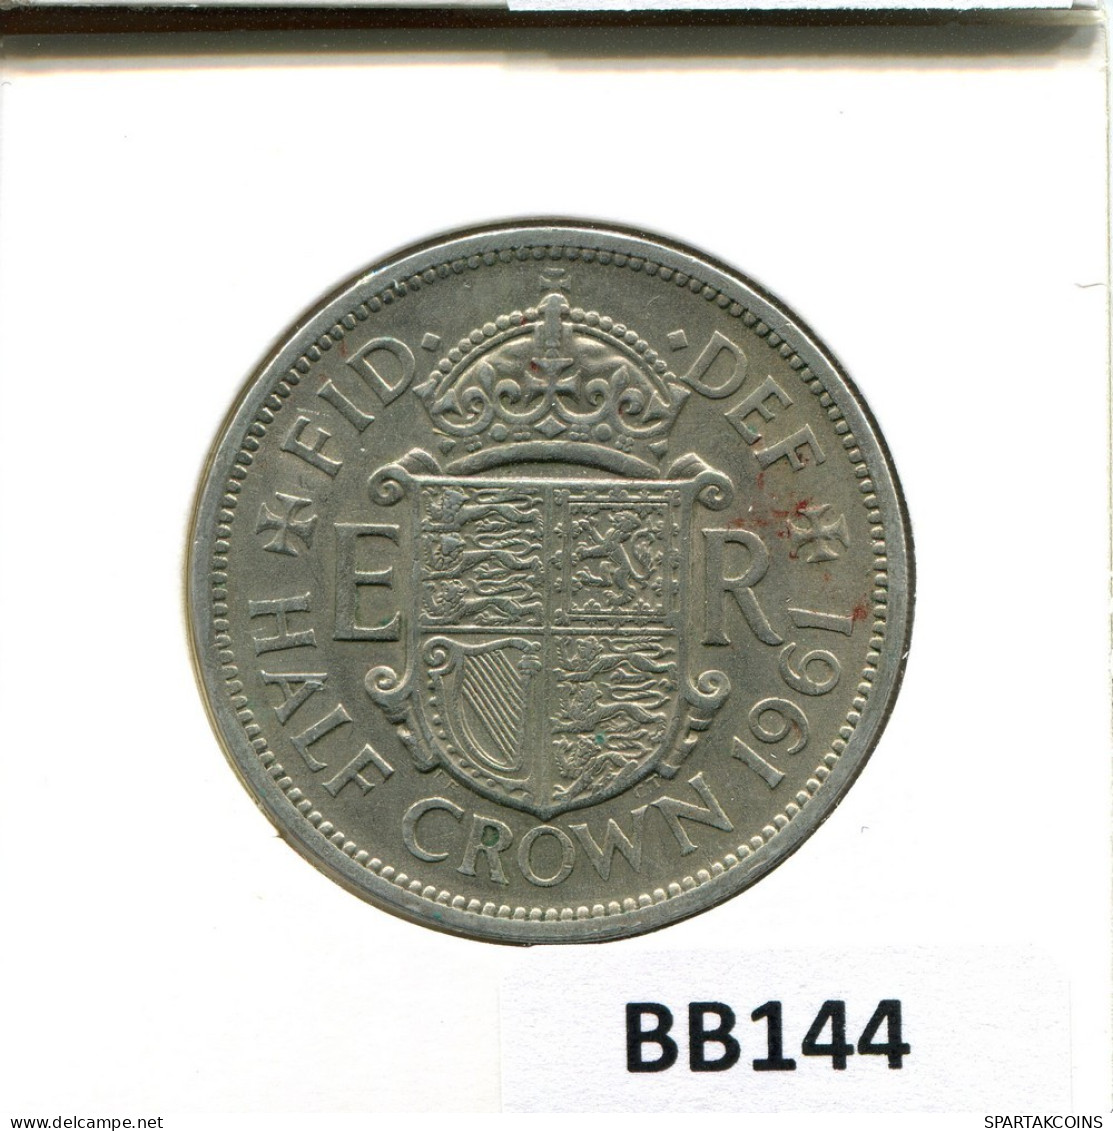 HALF CROWN 1961 UK GREAT BRITAIN Coin #BB144.U.A - K. 1/2 Crown